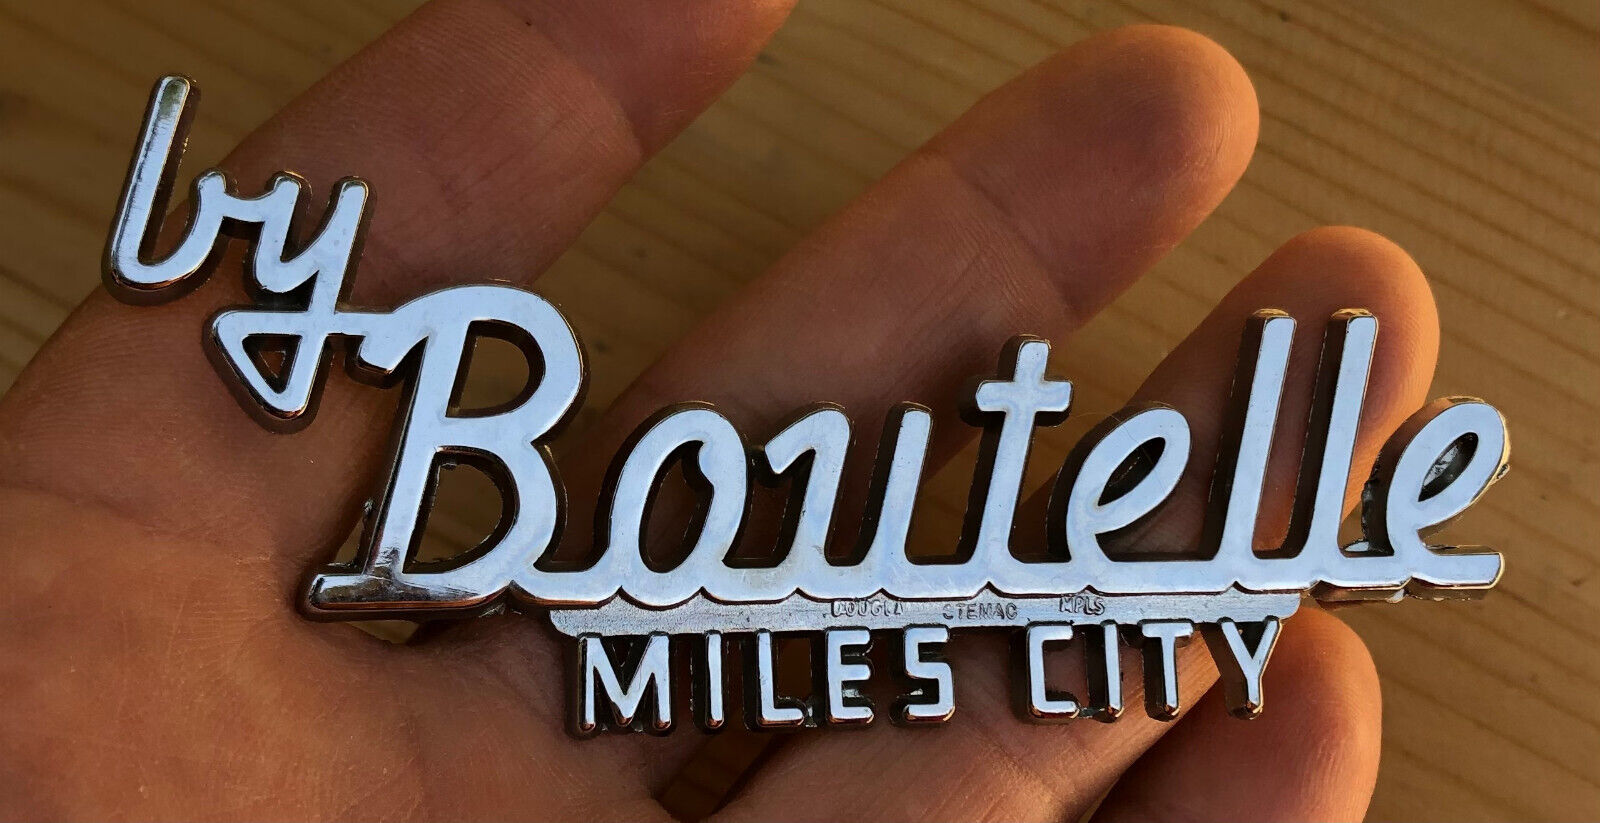 Vintage by Boutelle Packard Miles City Montana Metal Dealer Badge Tag Emblem